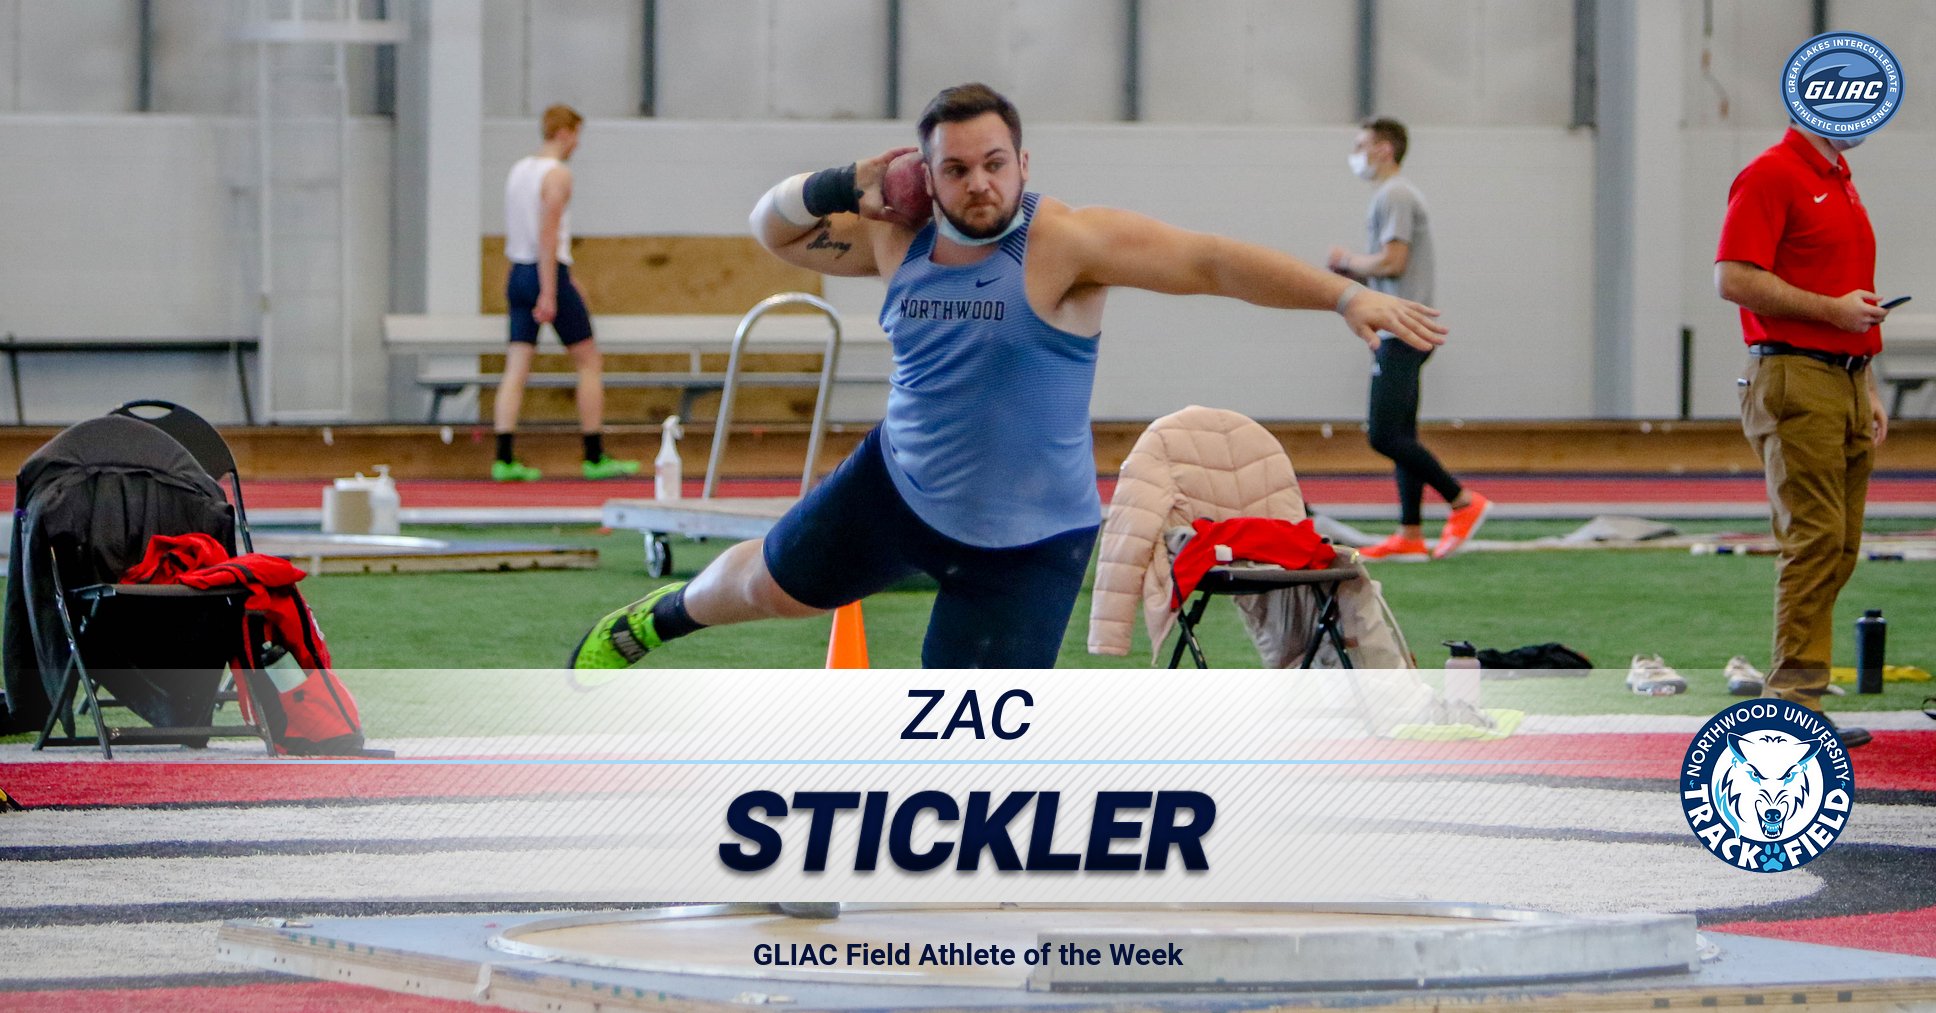 Zac Stickler Named GLIAC Field Athlete of the Week